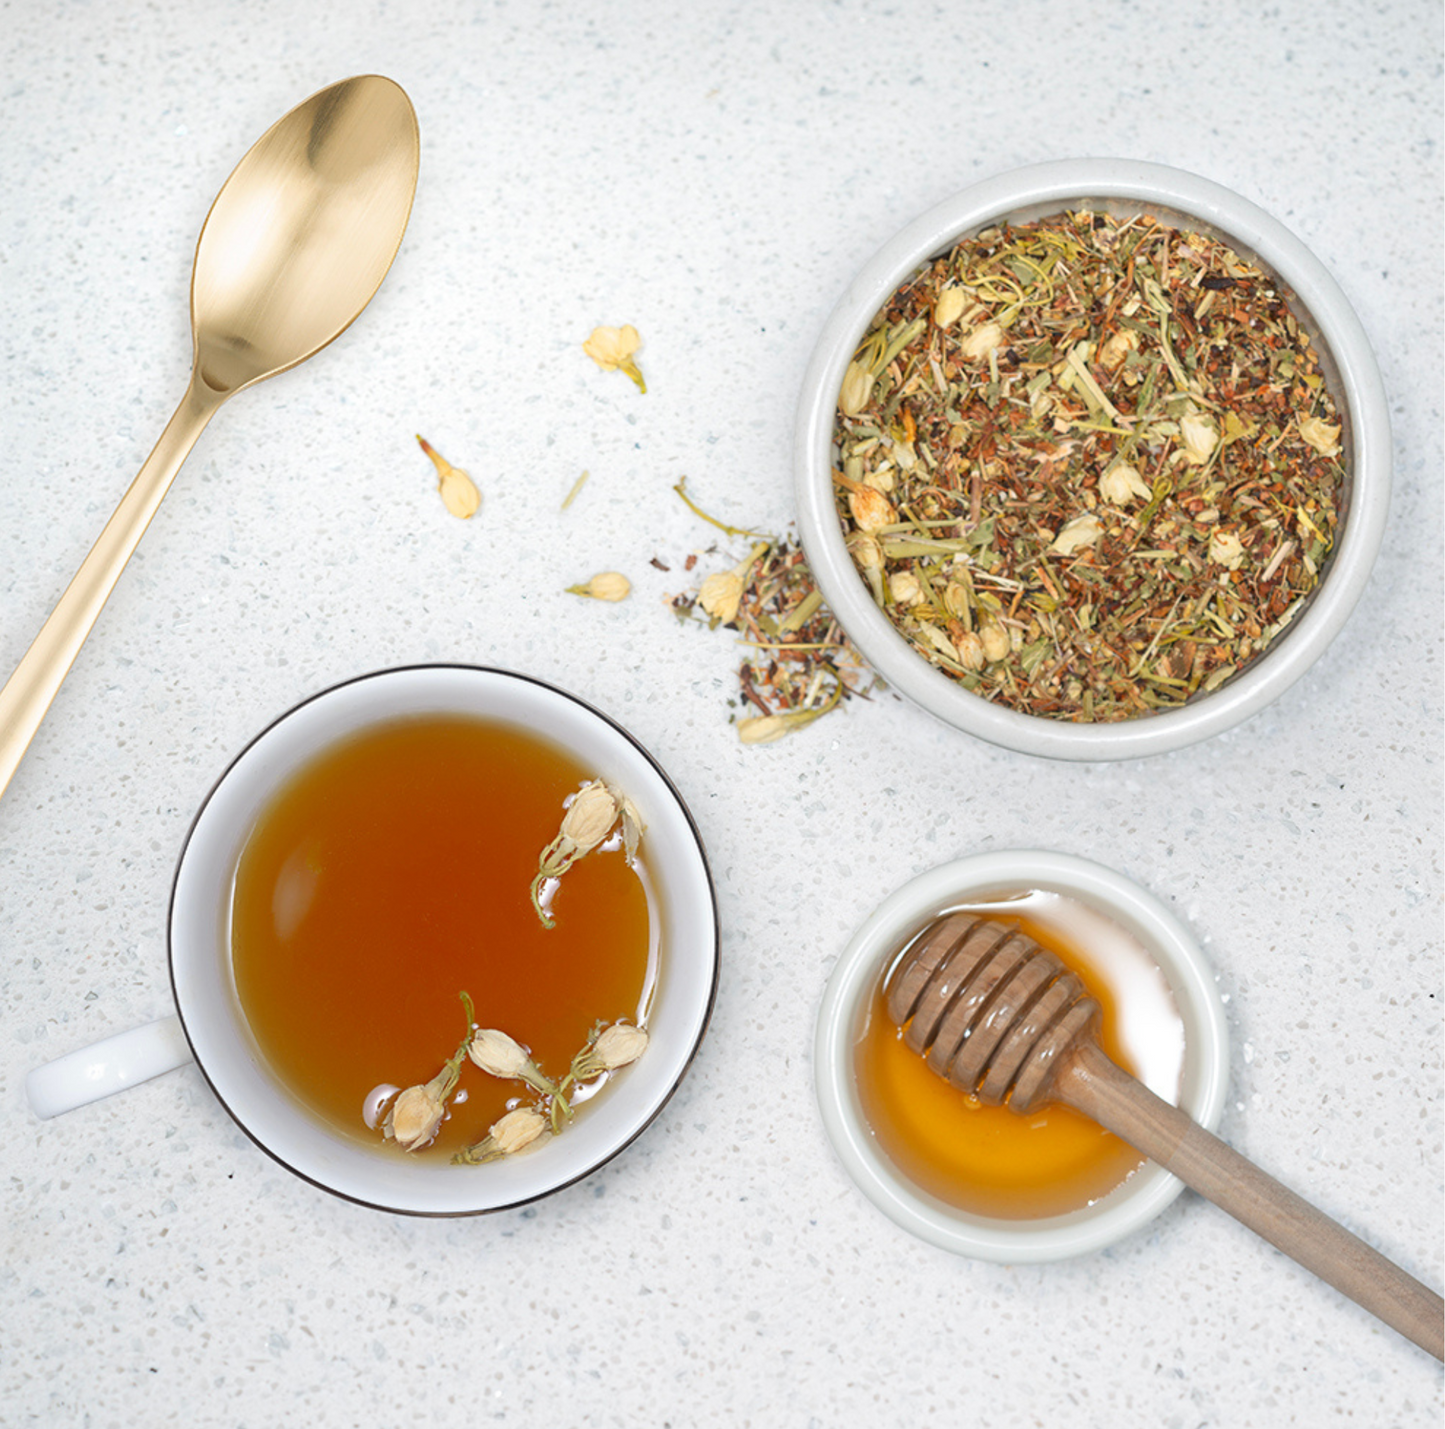 Tahitian Honey - Tea for Daily Calm